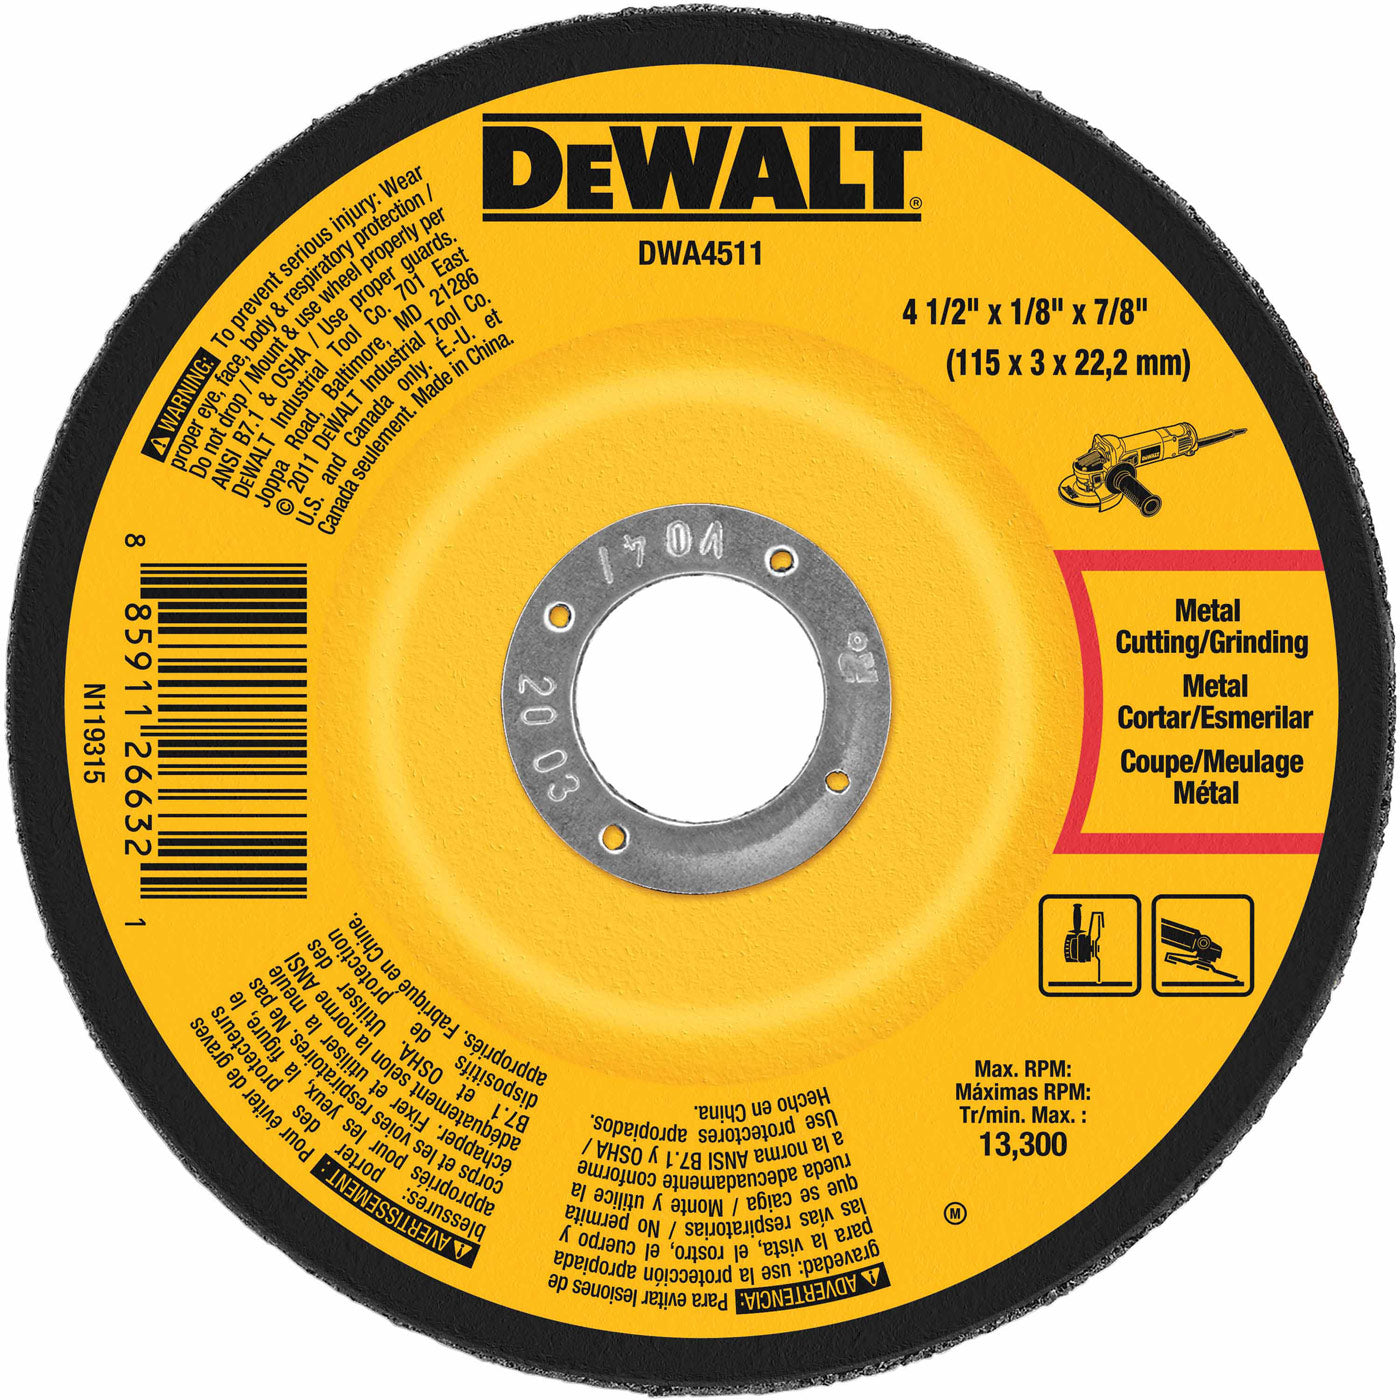 DeWalt DWA4511 4-1/2" x 1/8" x 7/8" Metal Grinding Wheel